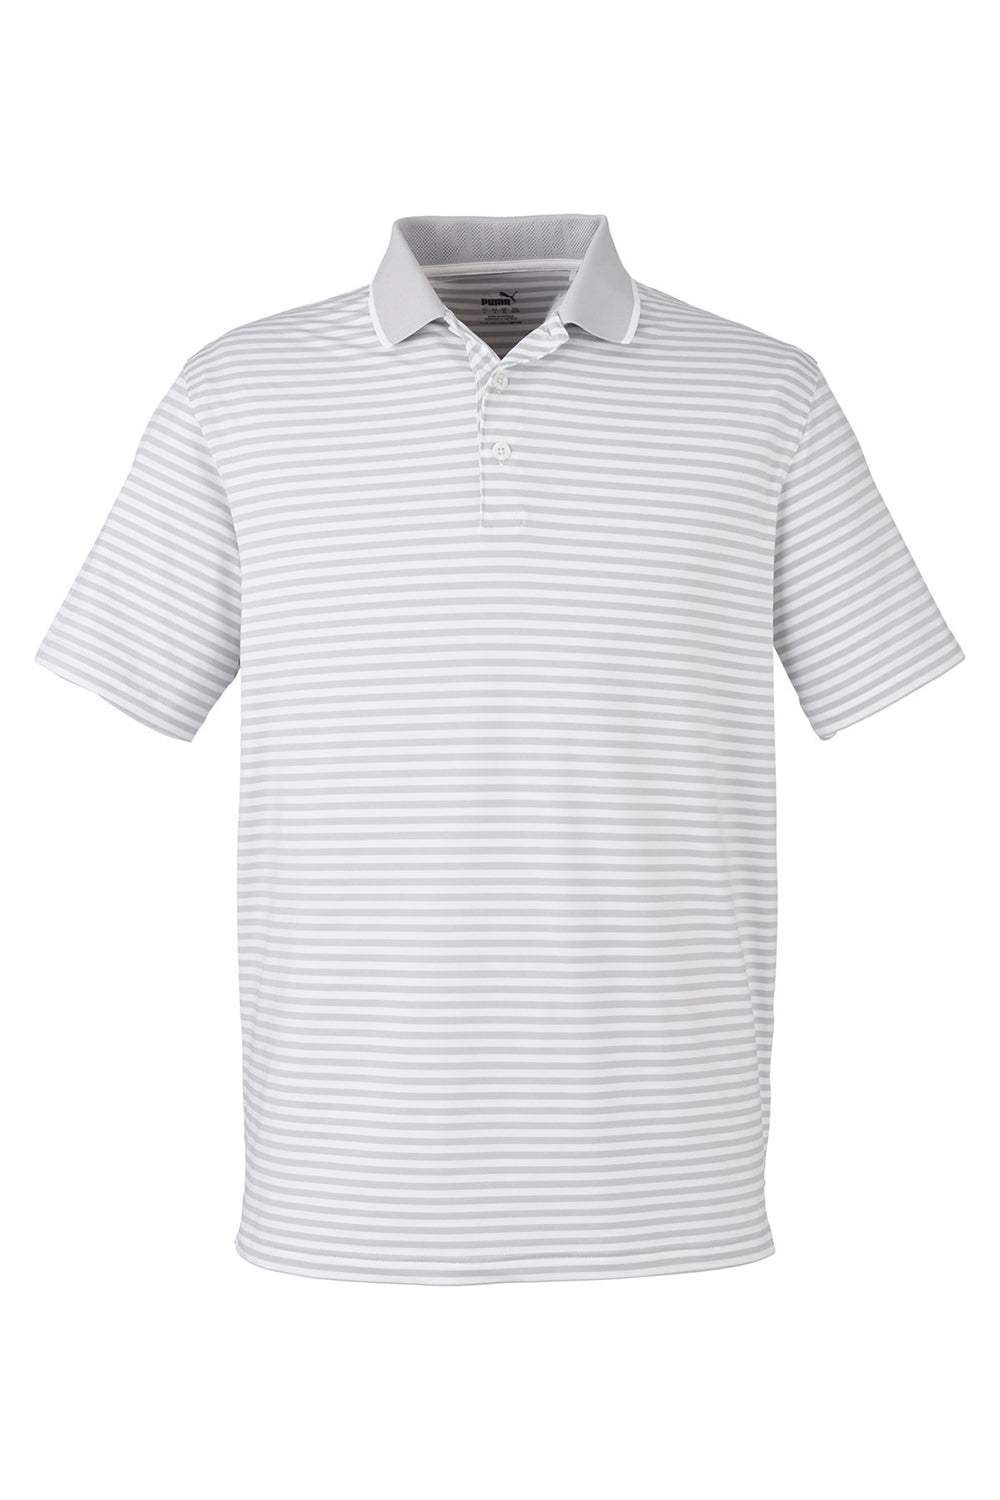 Puma 537447 Mens Mattr Feeder Short Sleeve Polo Shirt High Rise Grey Flat Front